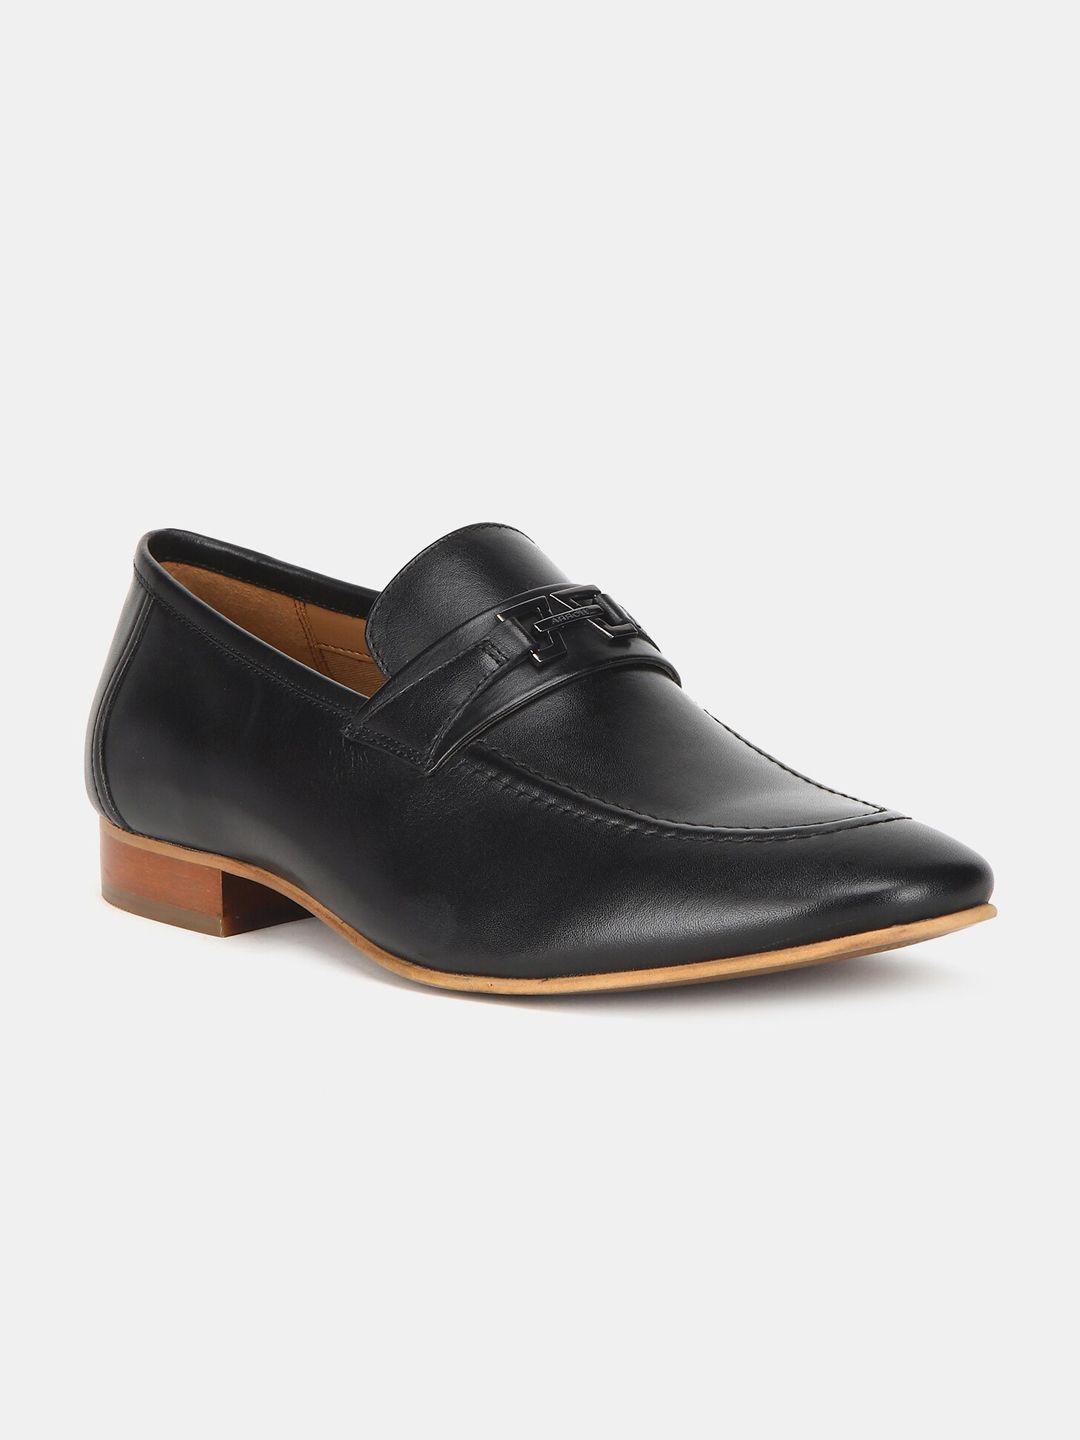 arrow-men-black-solid-leather-formal-loafers